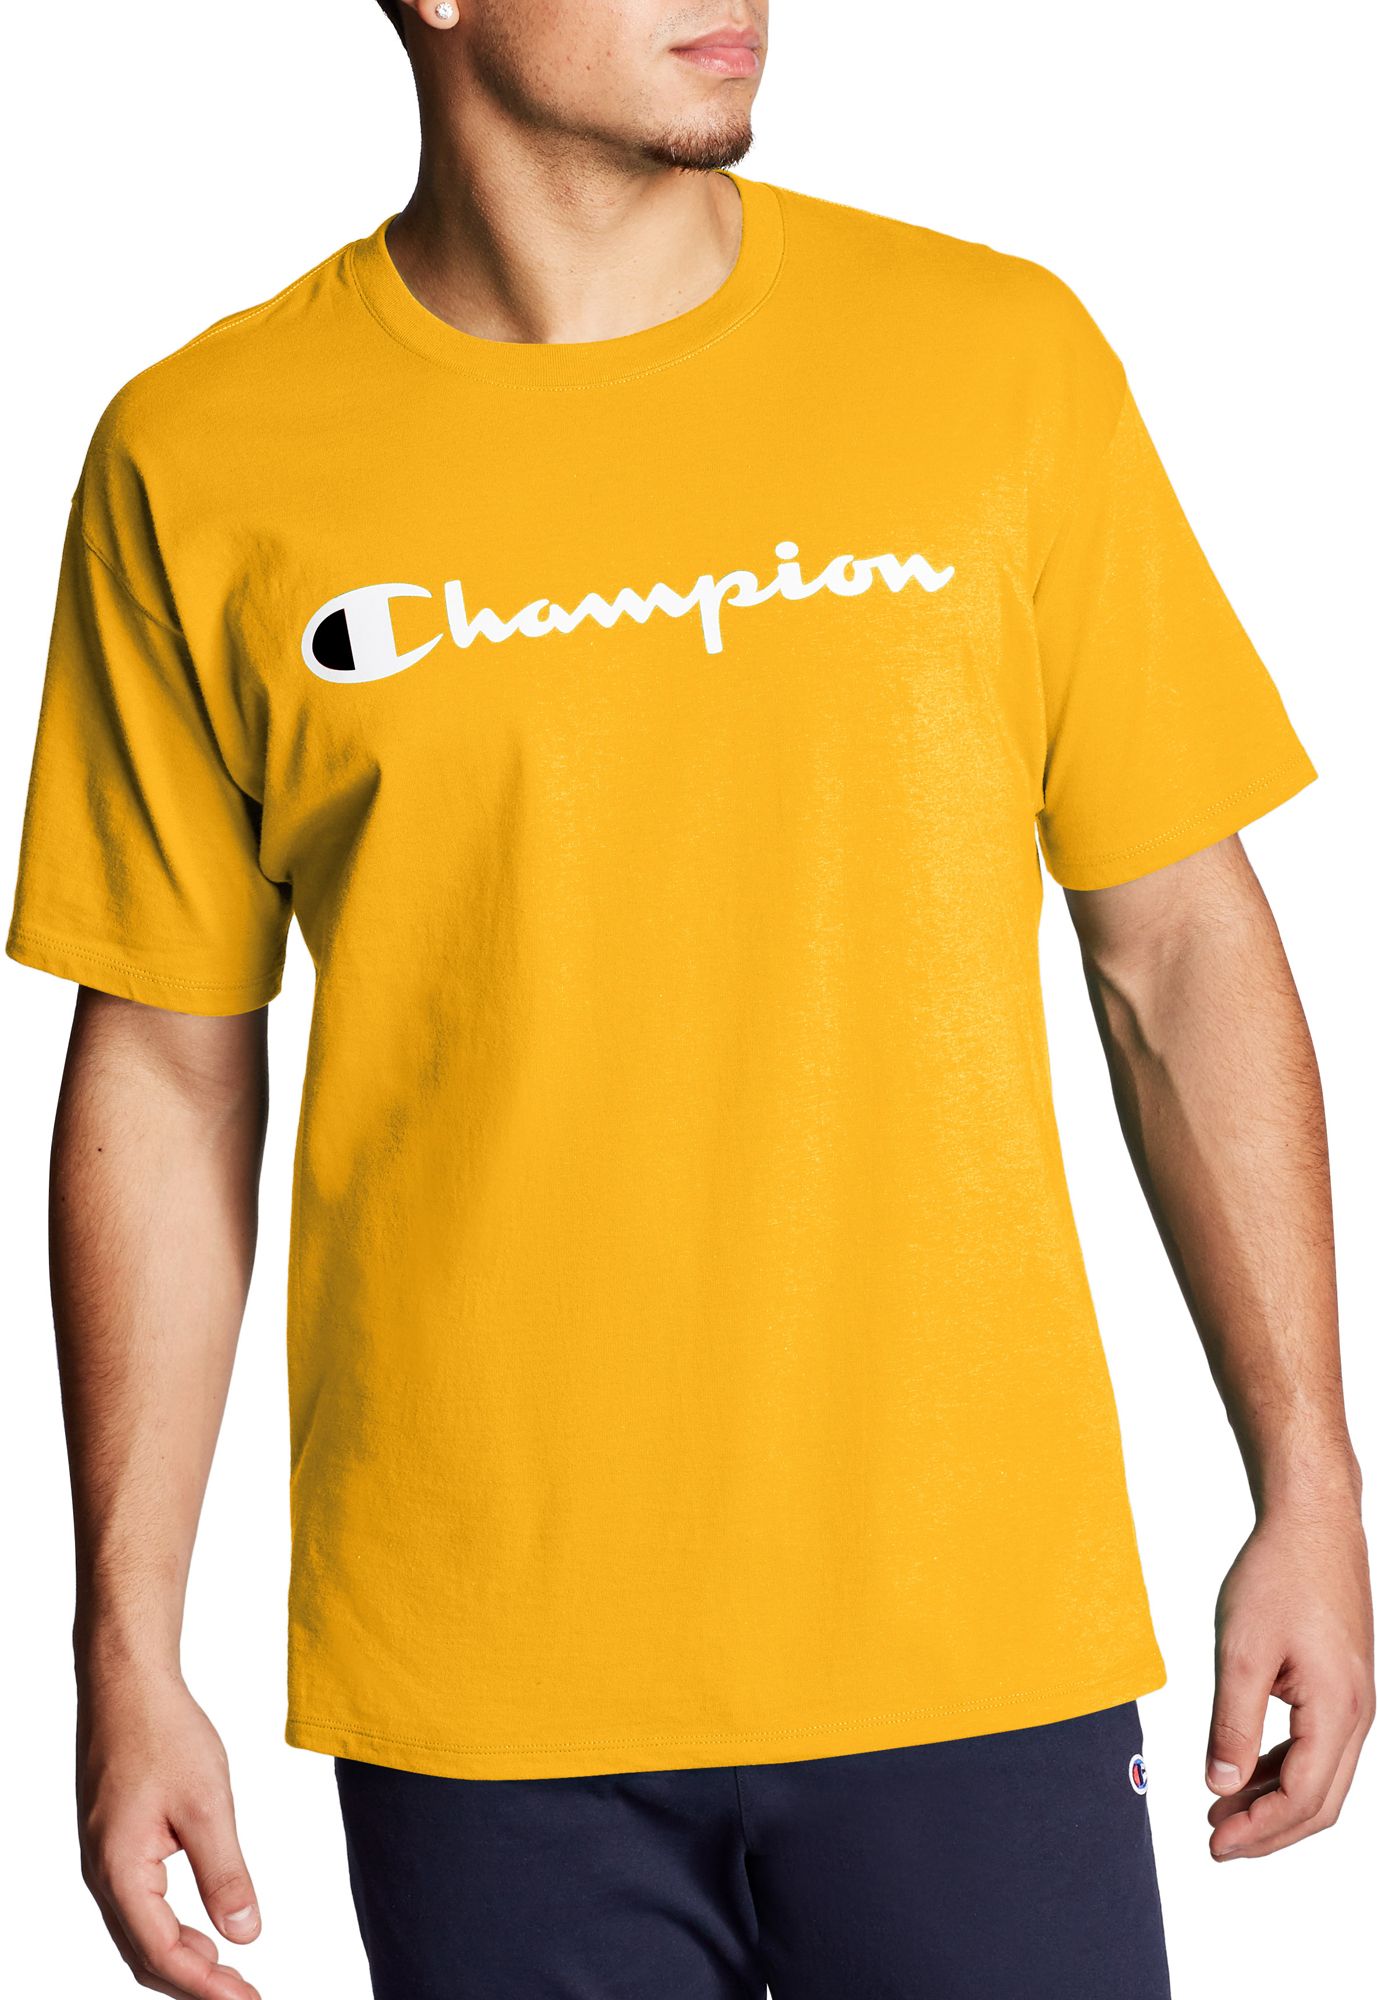 mens yellow champion shirt